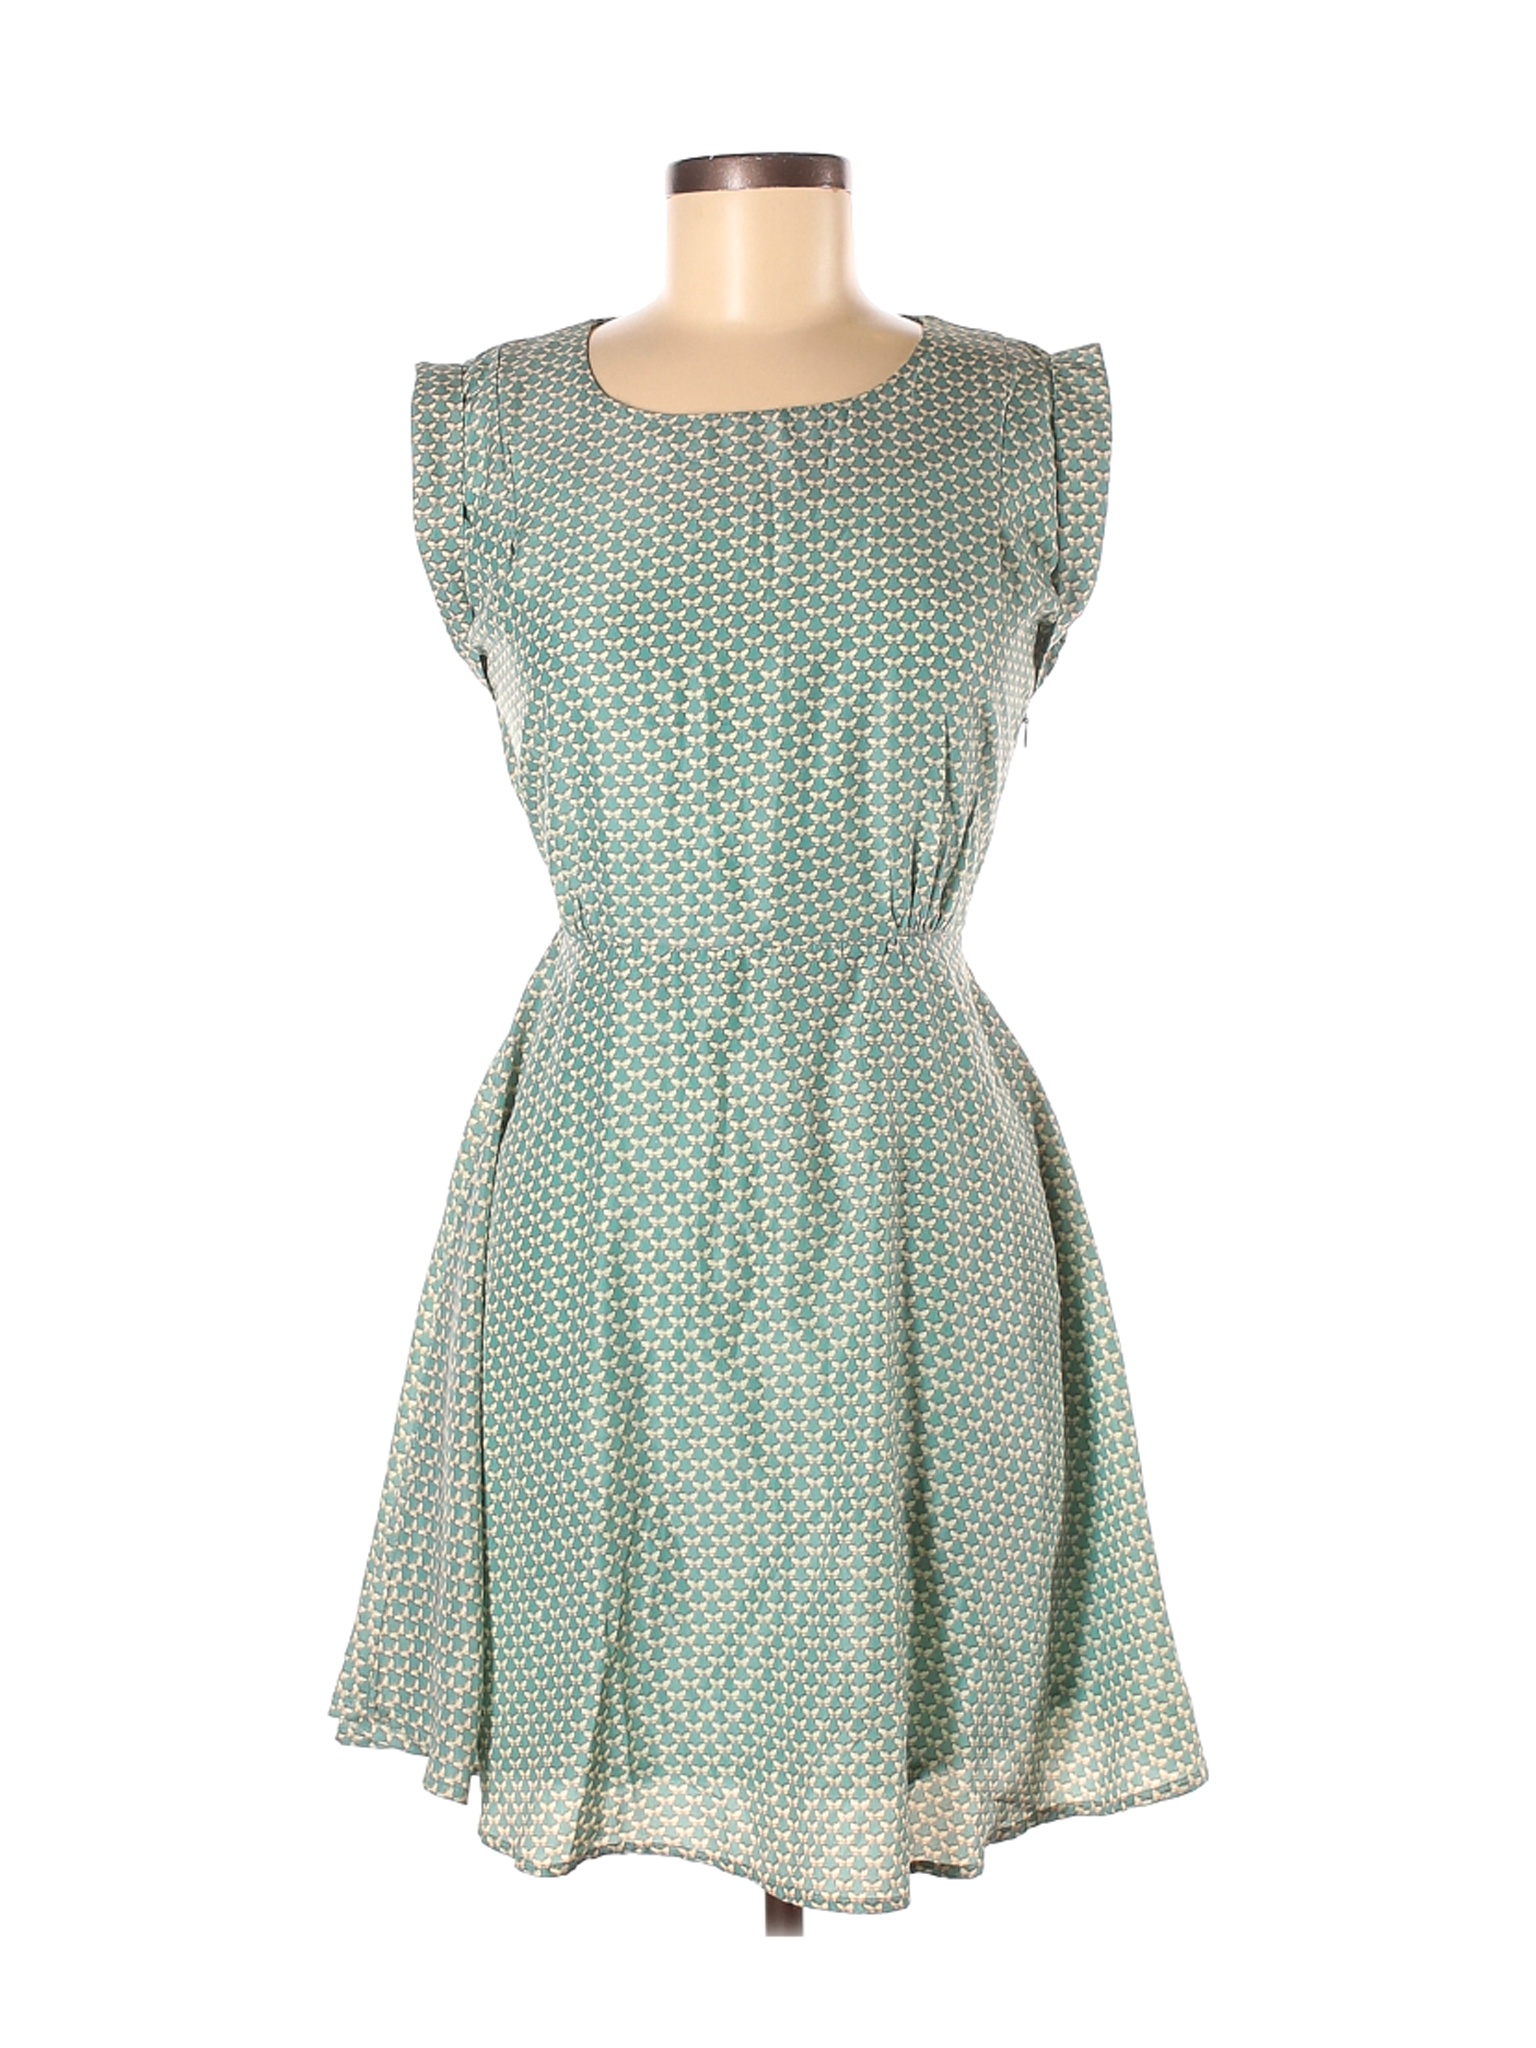 SM Wardrobe Women Green Casual Dress M | eBay